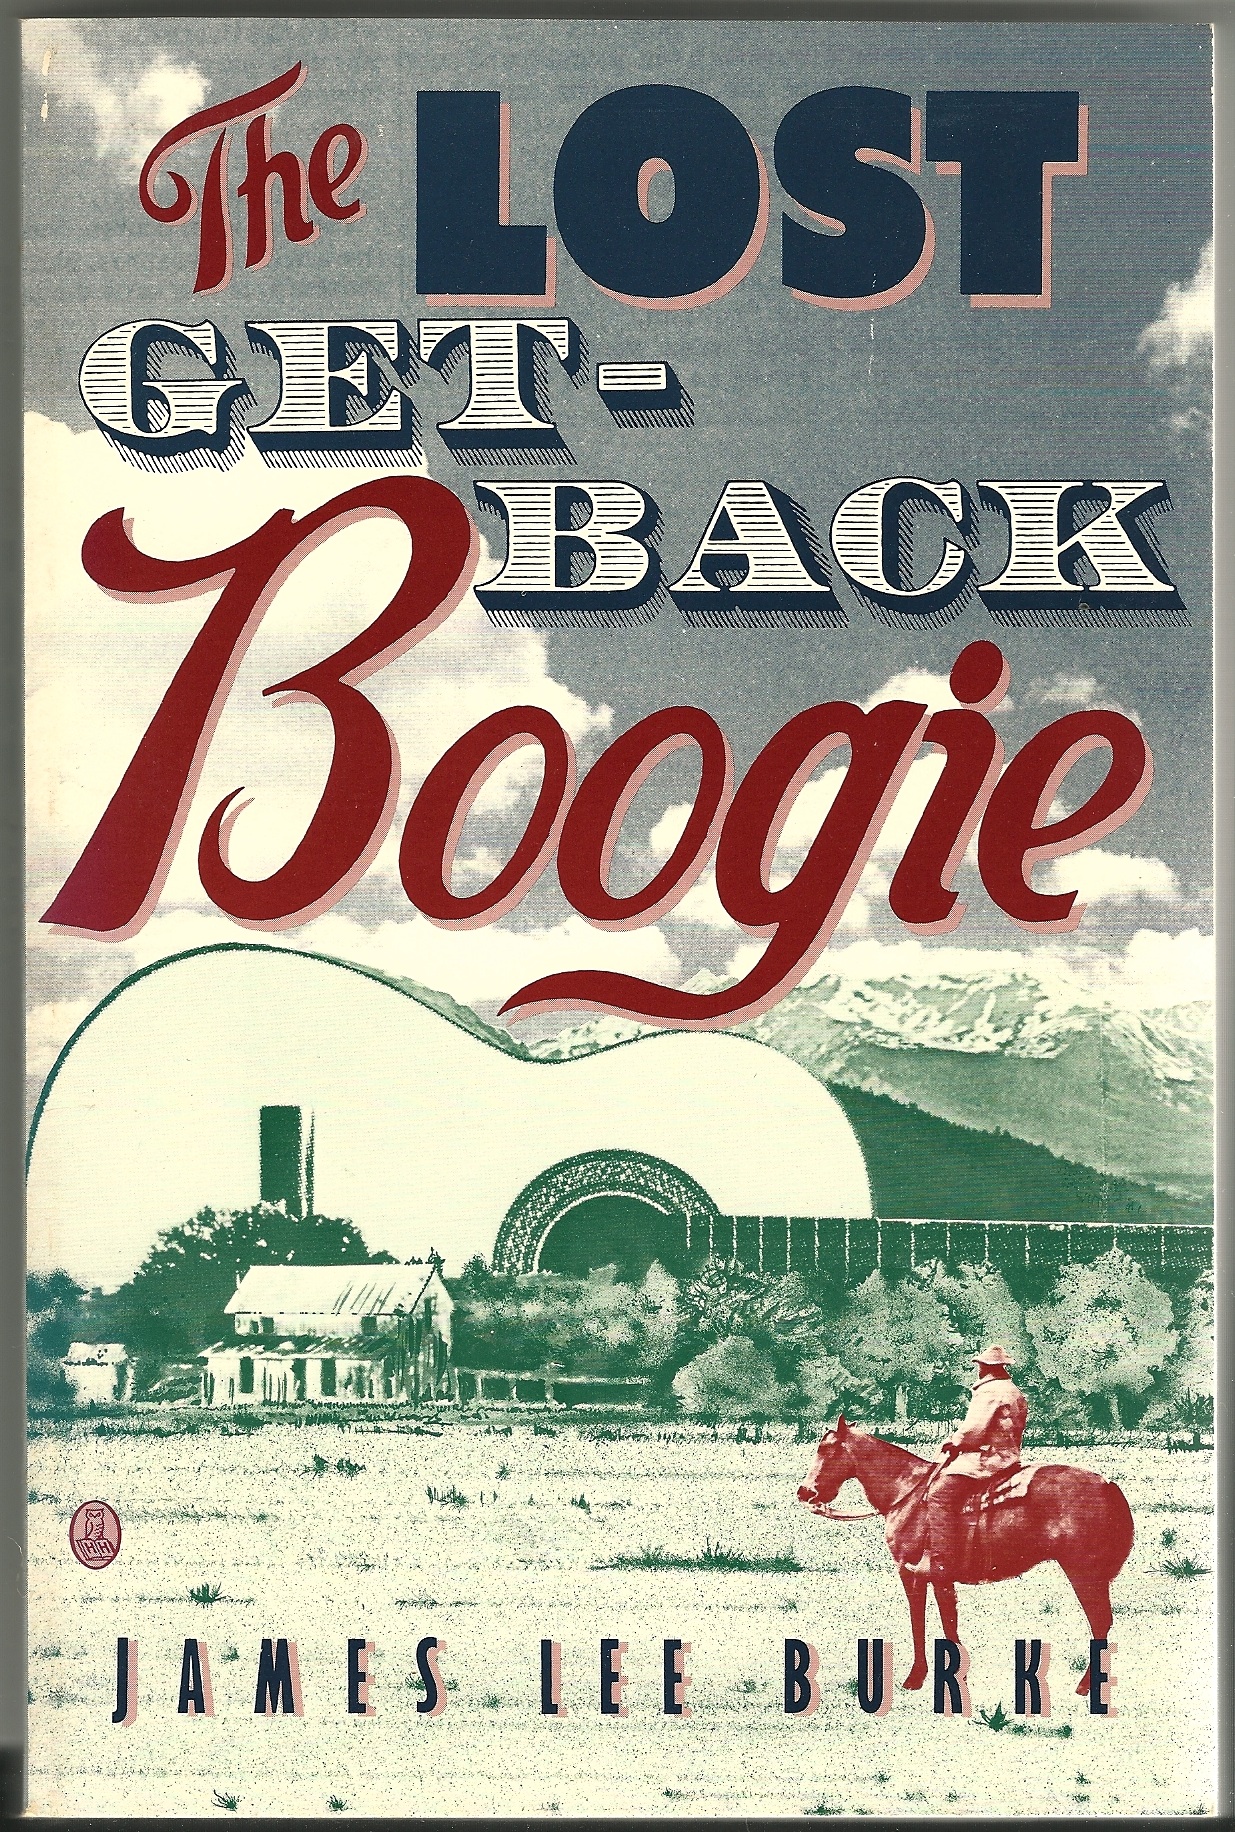 Lost Get-Back Boogie